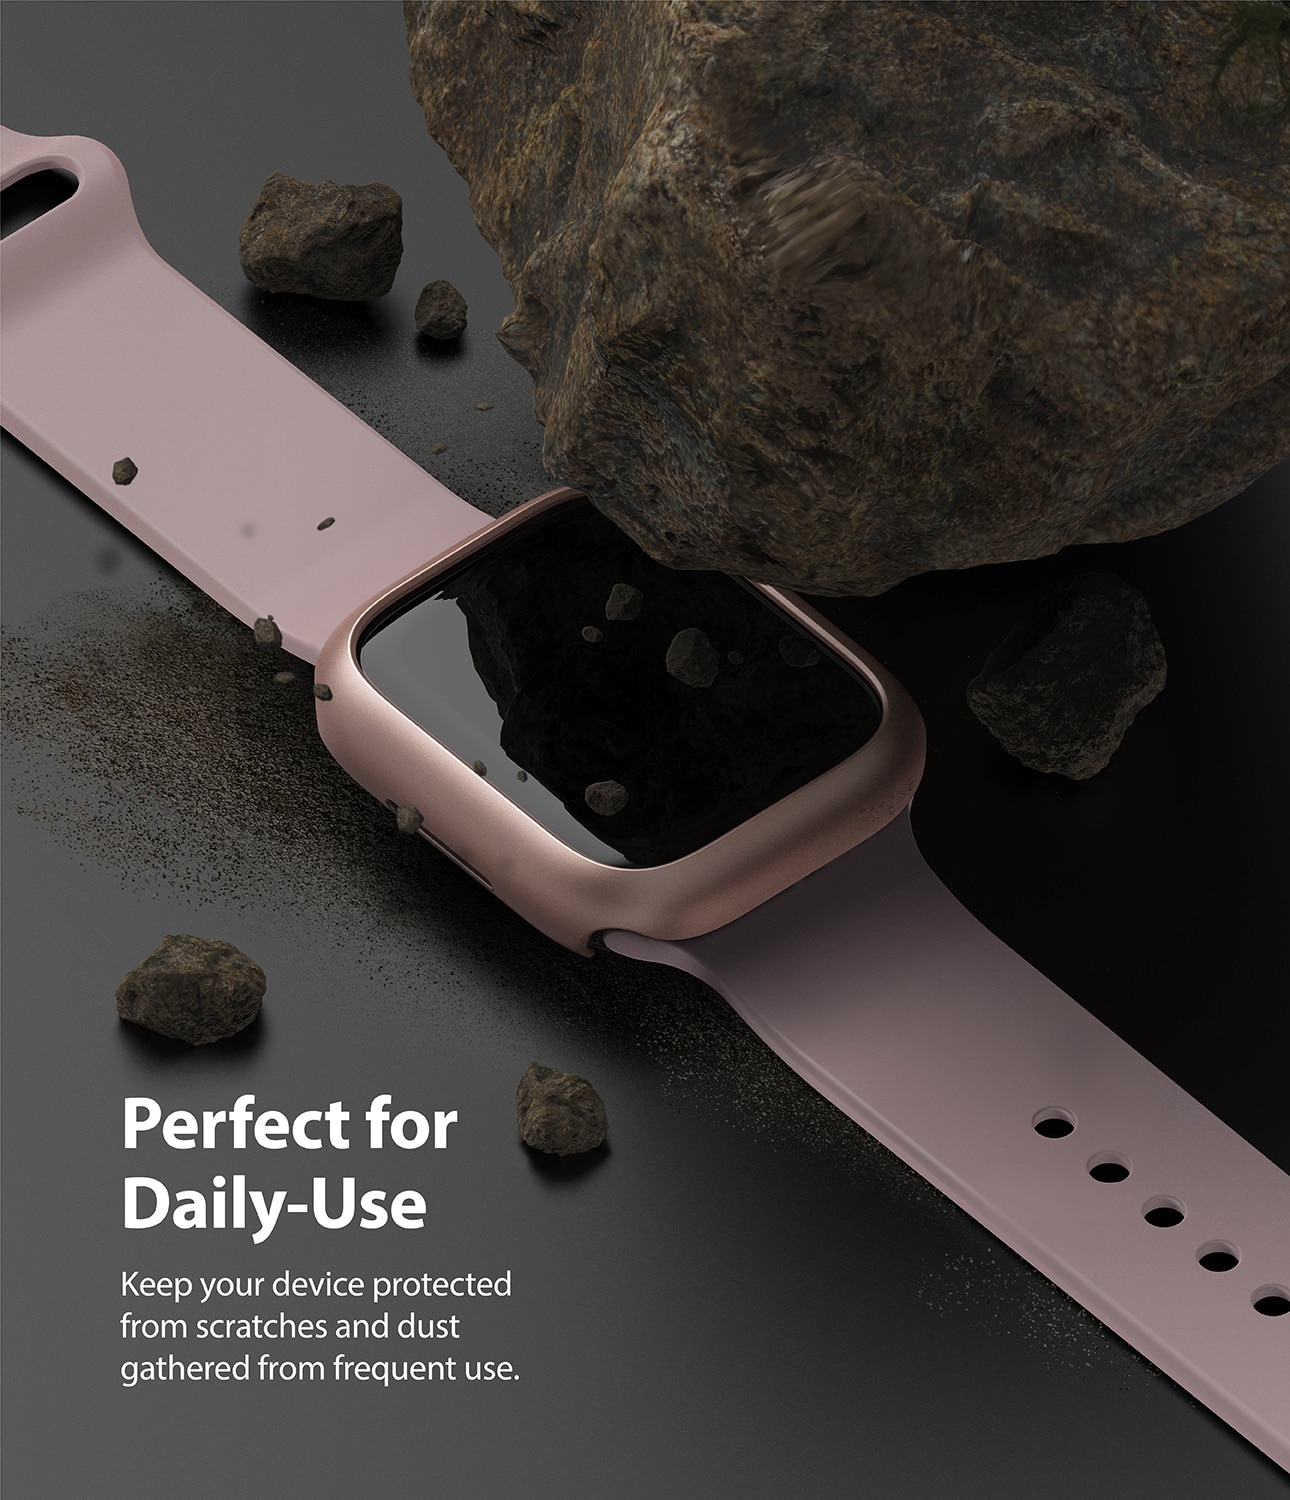 Apple Watch 45mm Series 8 Slim Case (2-pack) Pink & Clear